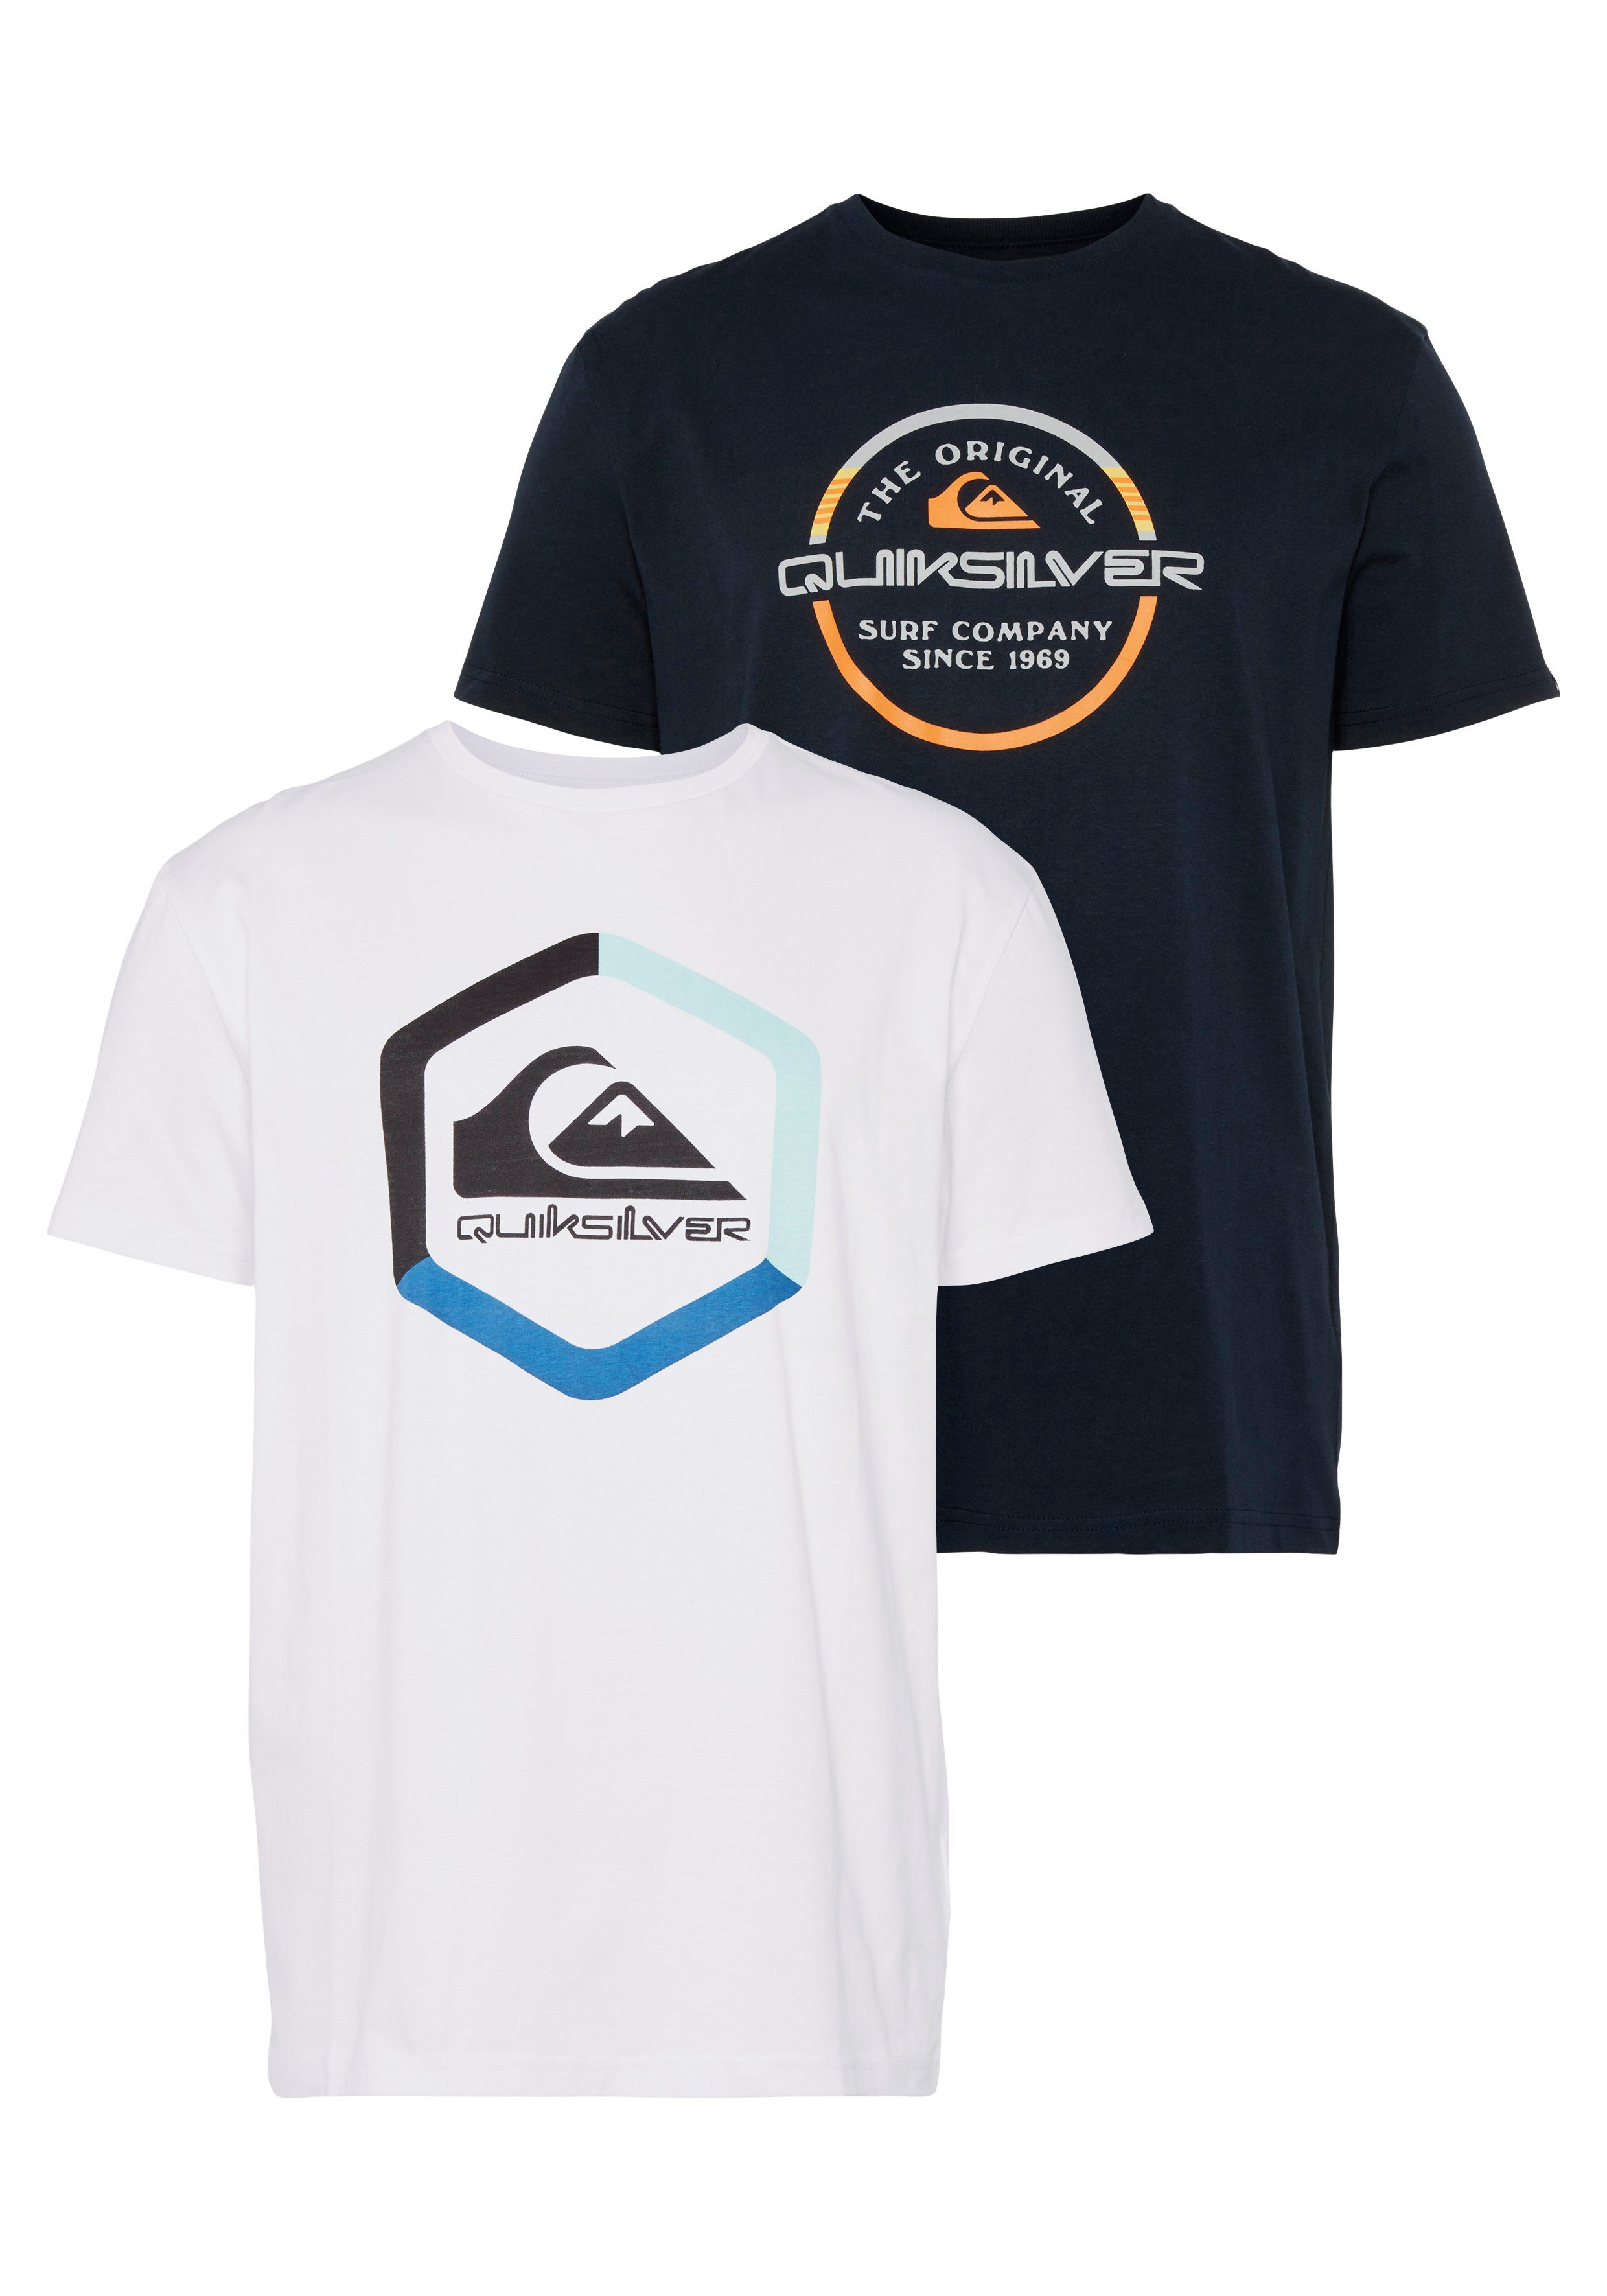 2er- Doppelpack von Herren 2-tlg., T-Shirt (Packung, Quiksilver mit Doppelpack T-Shirt Logodruck Quiksilver Pack),